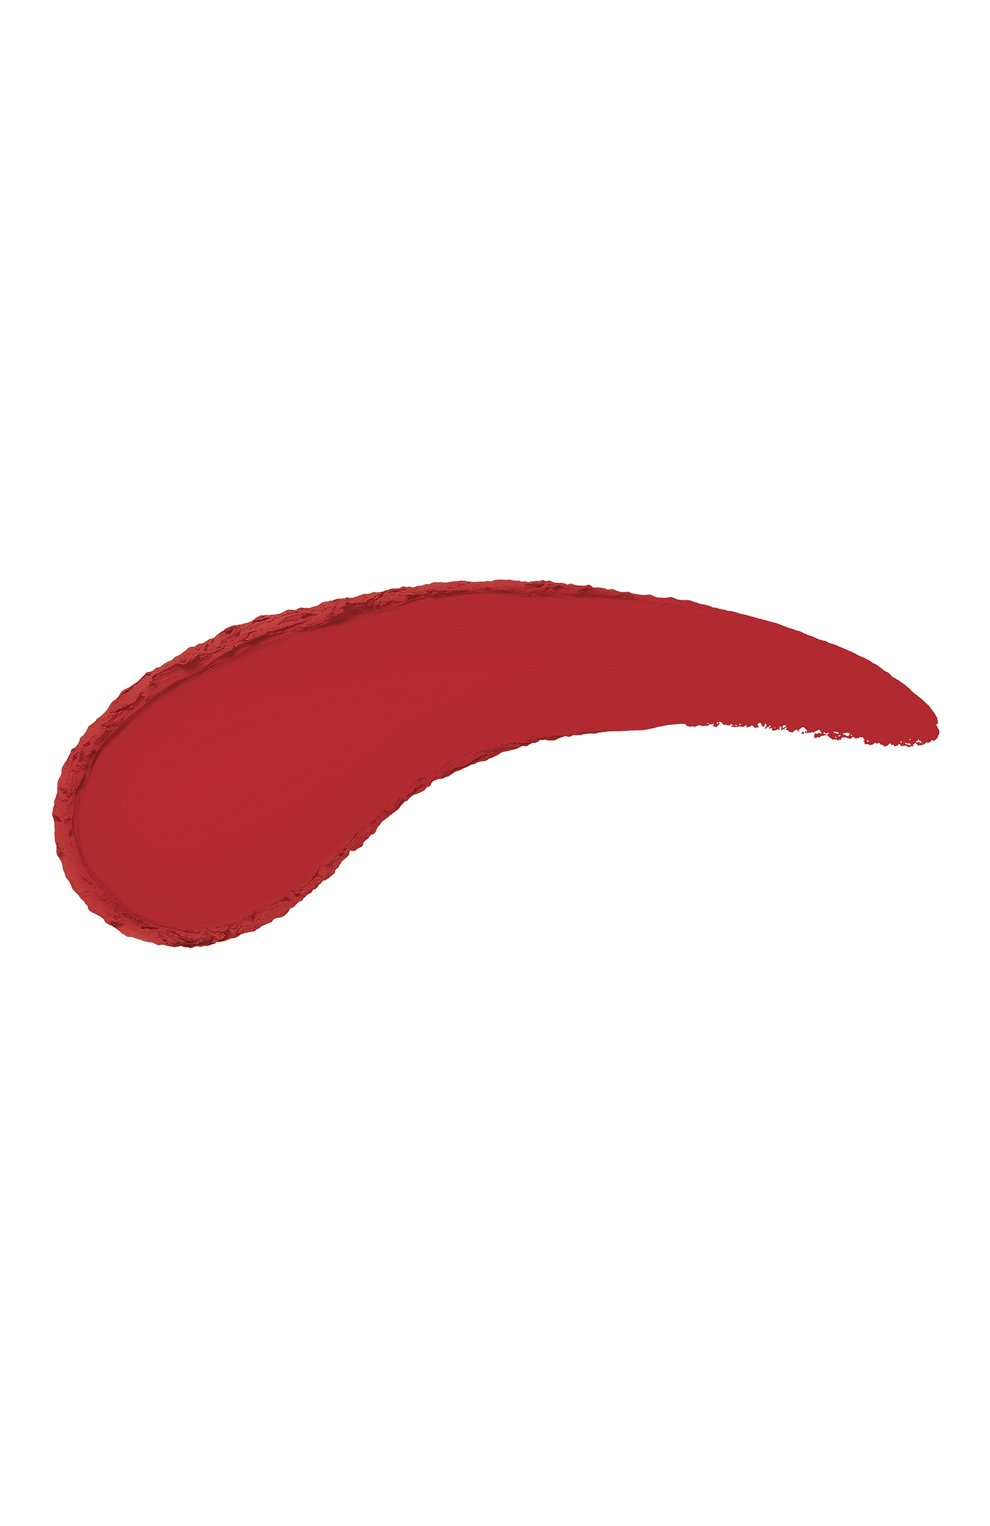 Стойкая матовая губная помада the only one matte, 625 vibrant red DOLCE & GABBANA  цвета, арт. 30701016DG | Фото 2 (Финишное покрытие: Матовый)